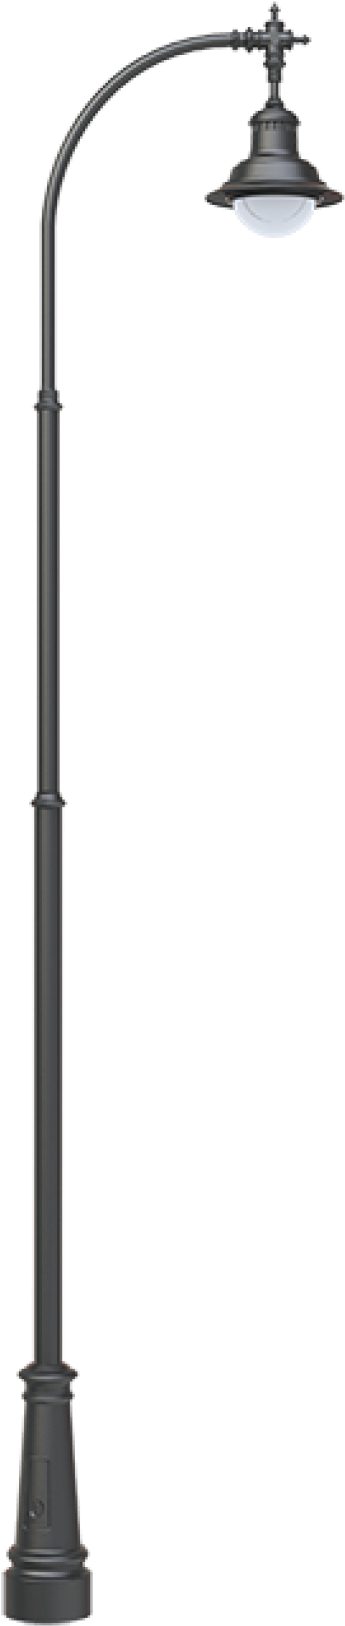 A Black Pole With A Light On It